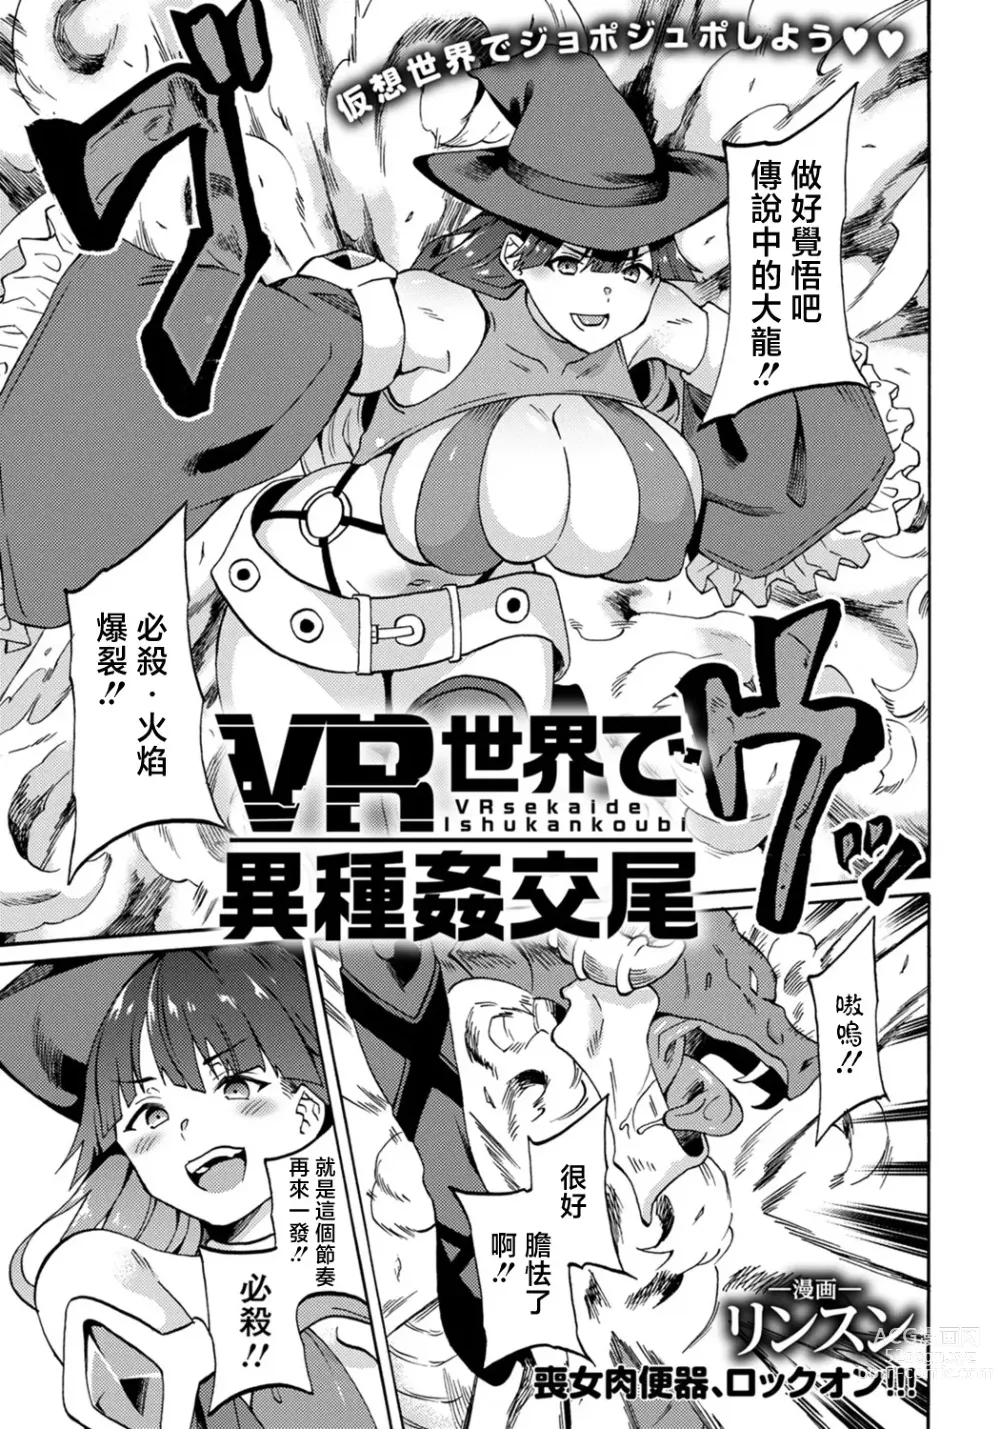 Page 1 of manga VR Sekai de Ishukan Koubi